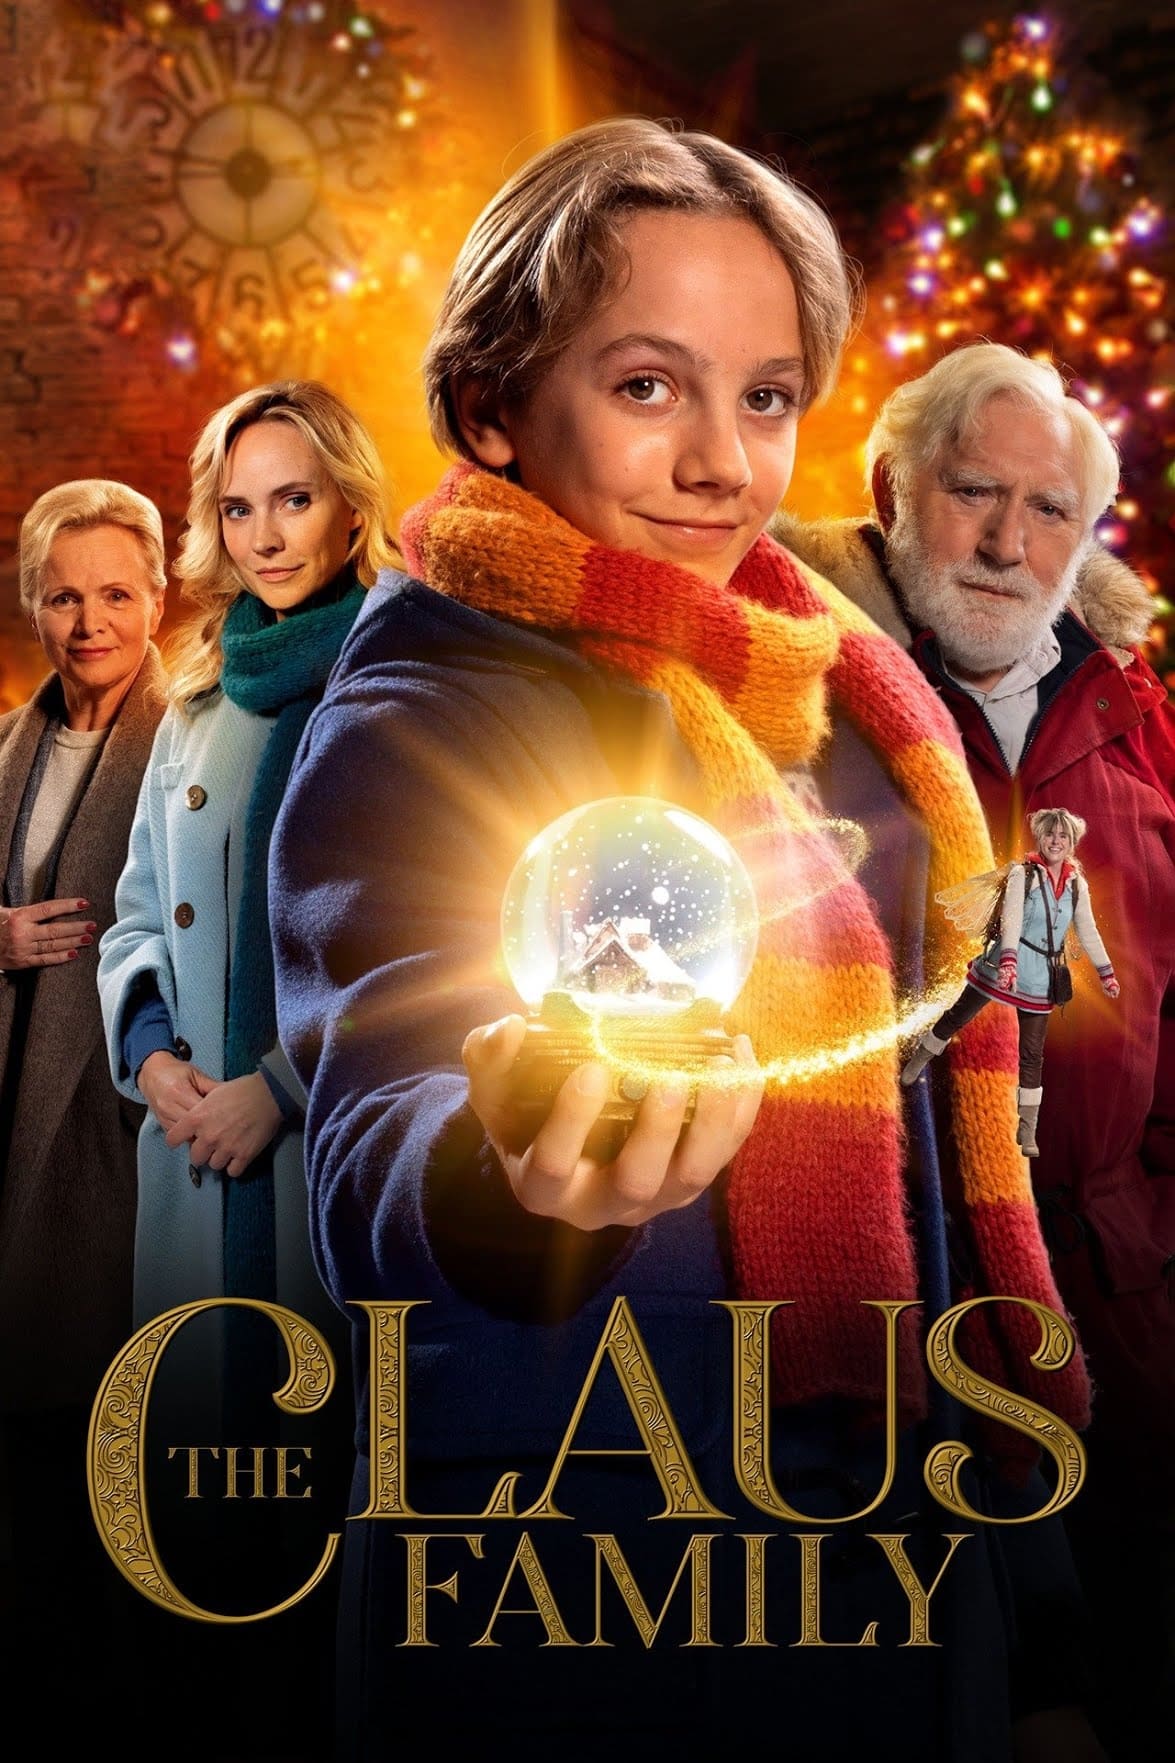 Plakát pro film “Clausovi”